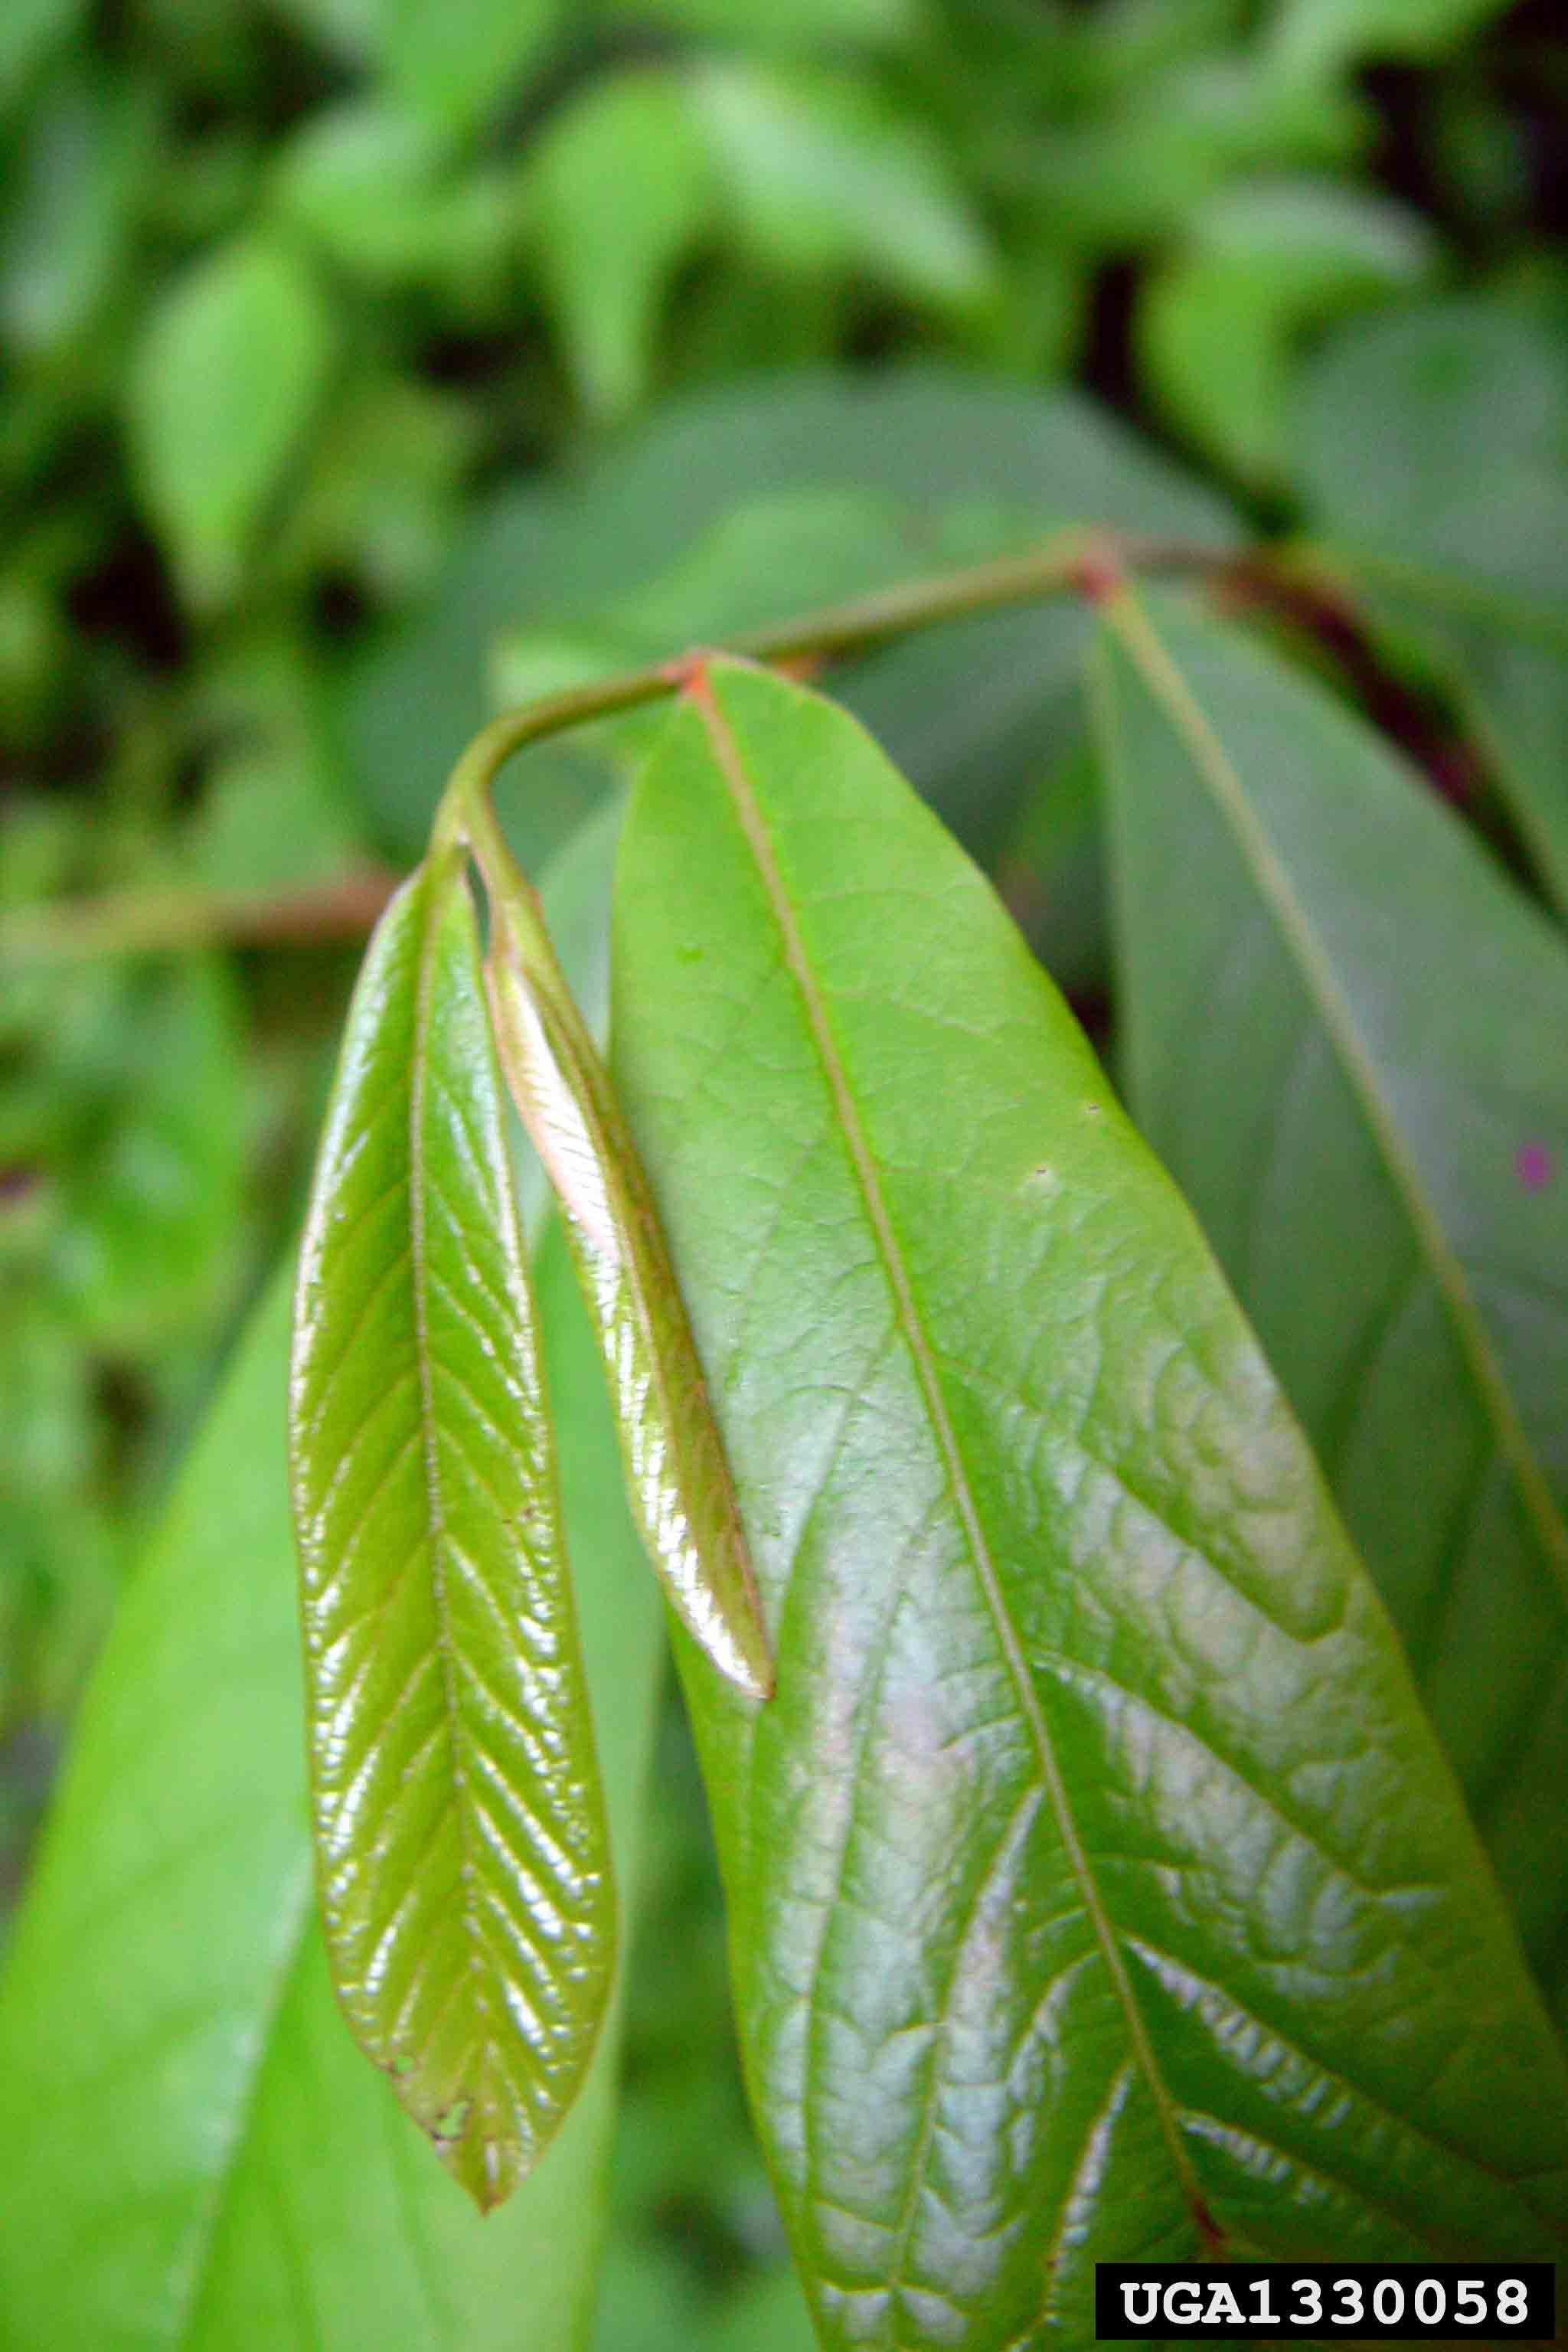 Pawpaw leaves